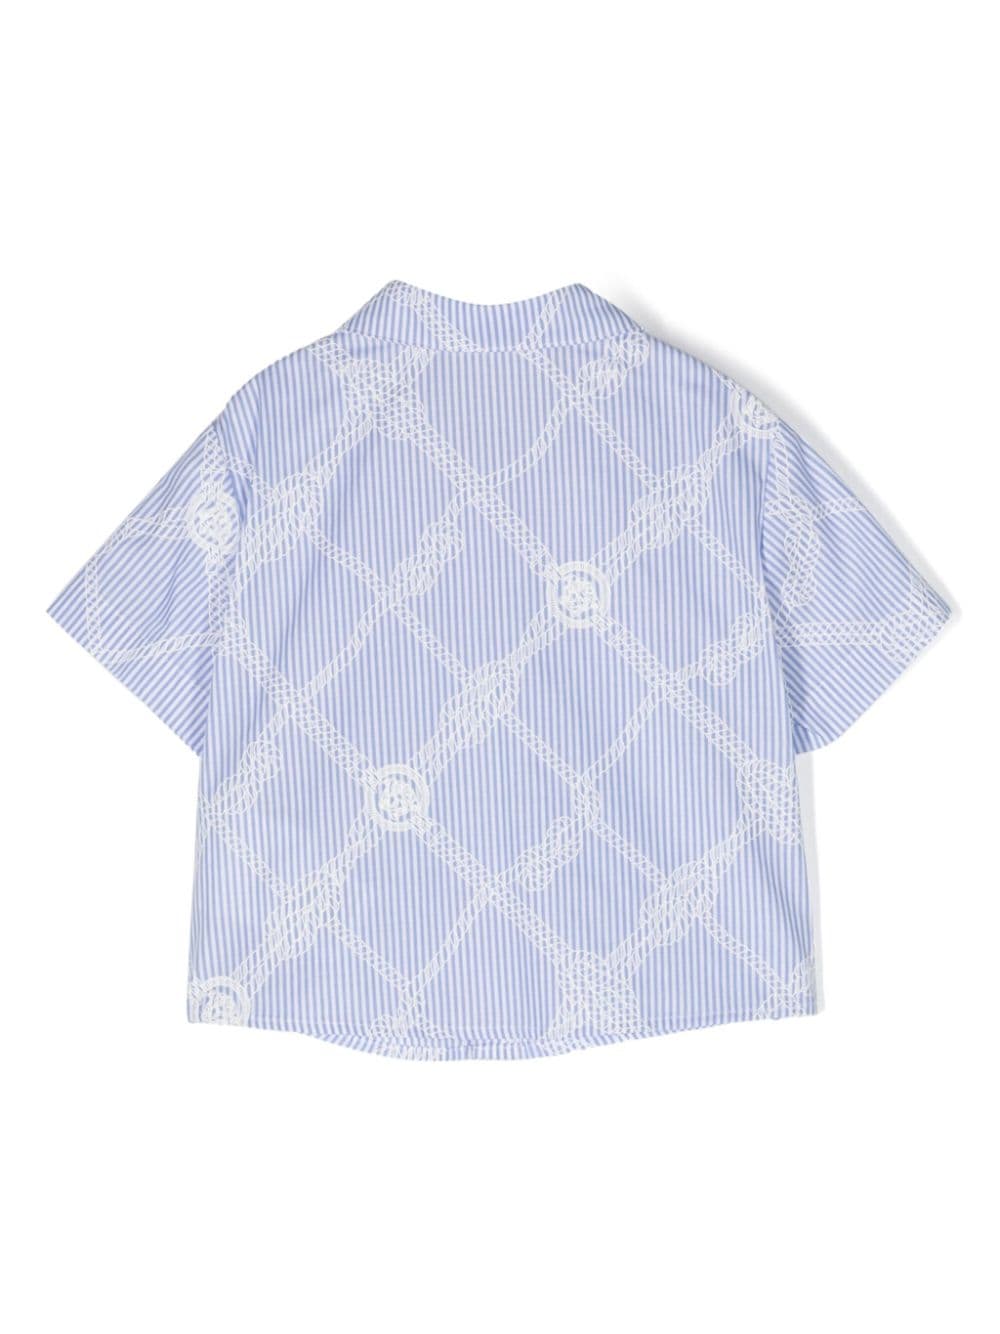 Camicia blu/bianca neonata